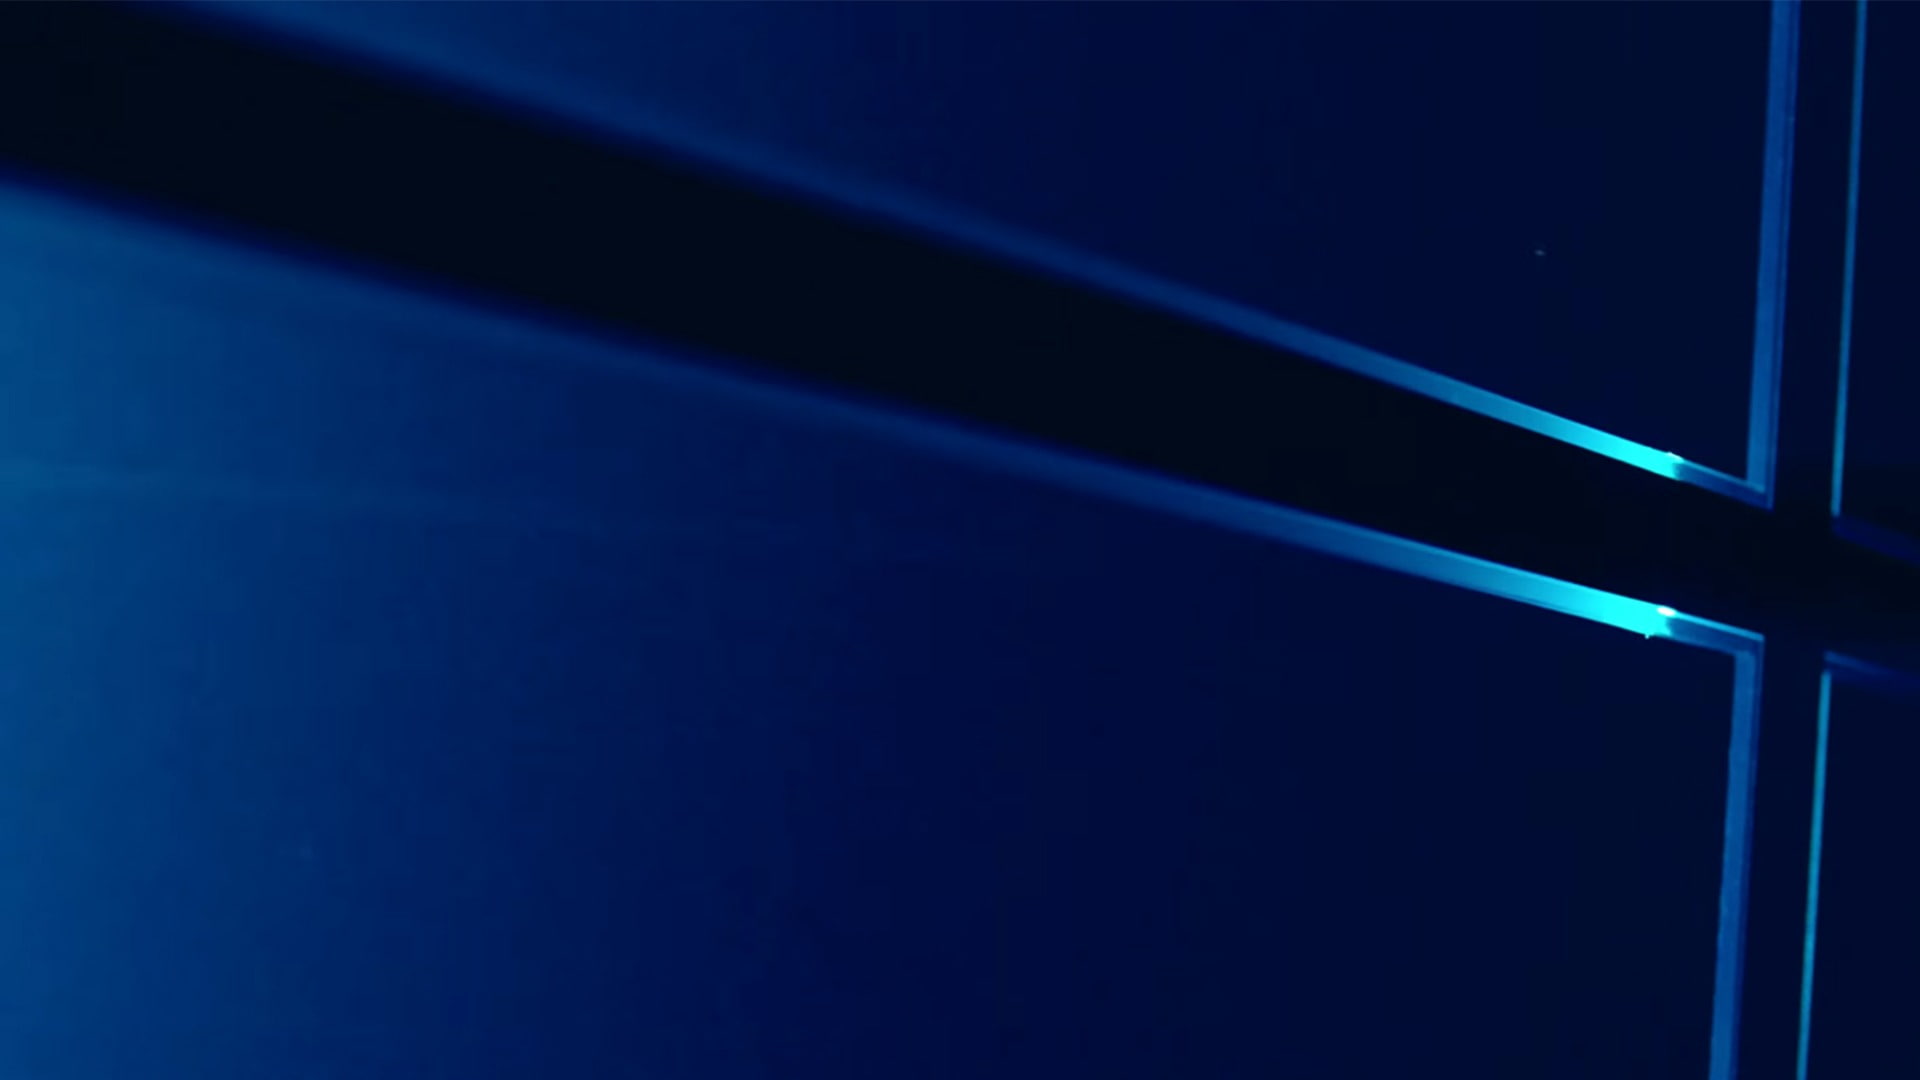 Microsoft Windows 10 Desktop Wallpaper 11, blue, no people, light - natural phenomenon